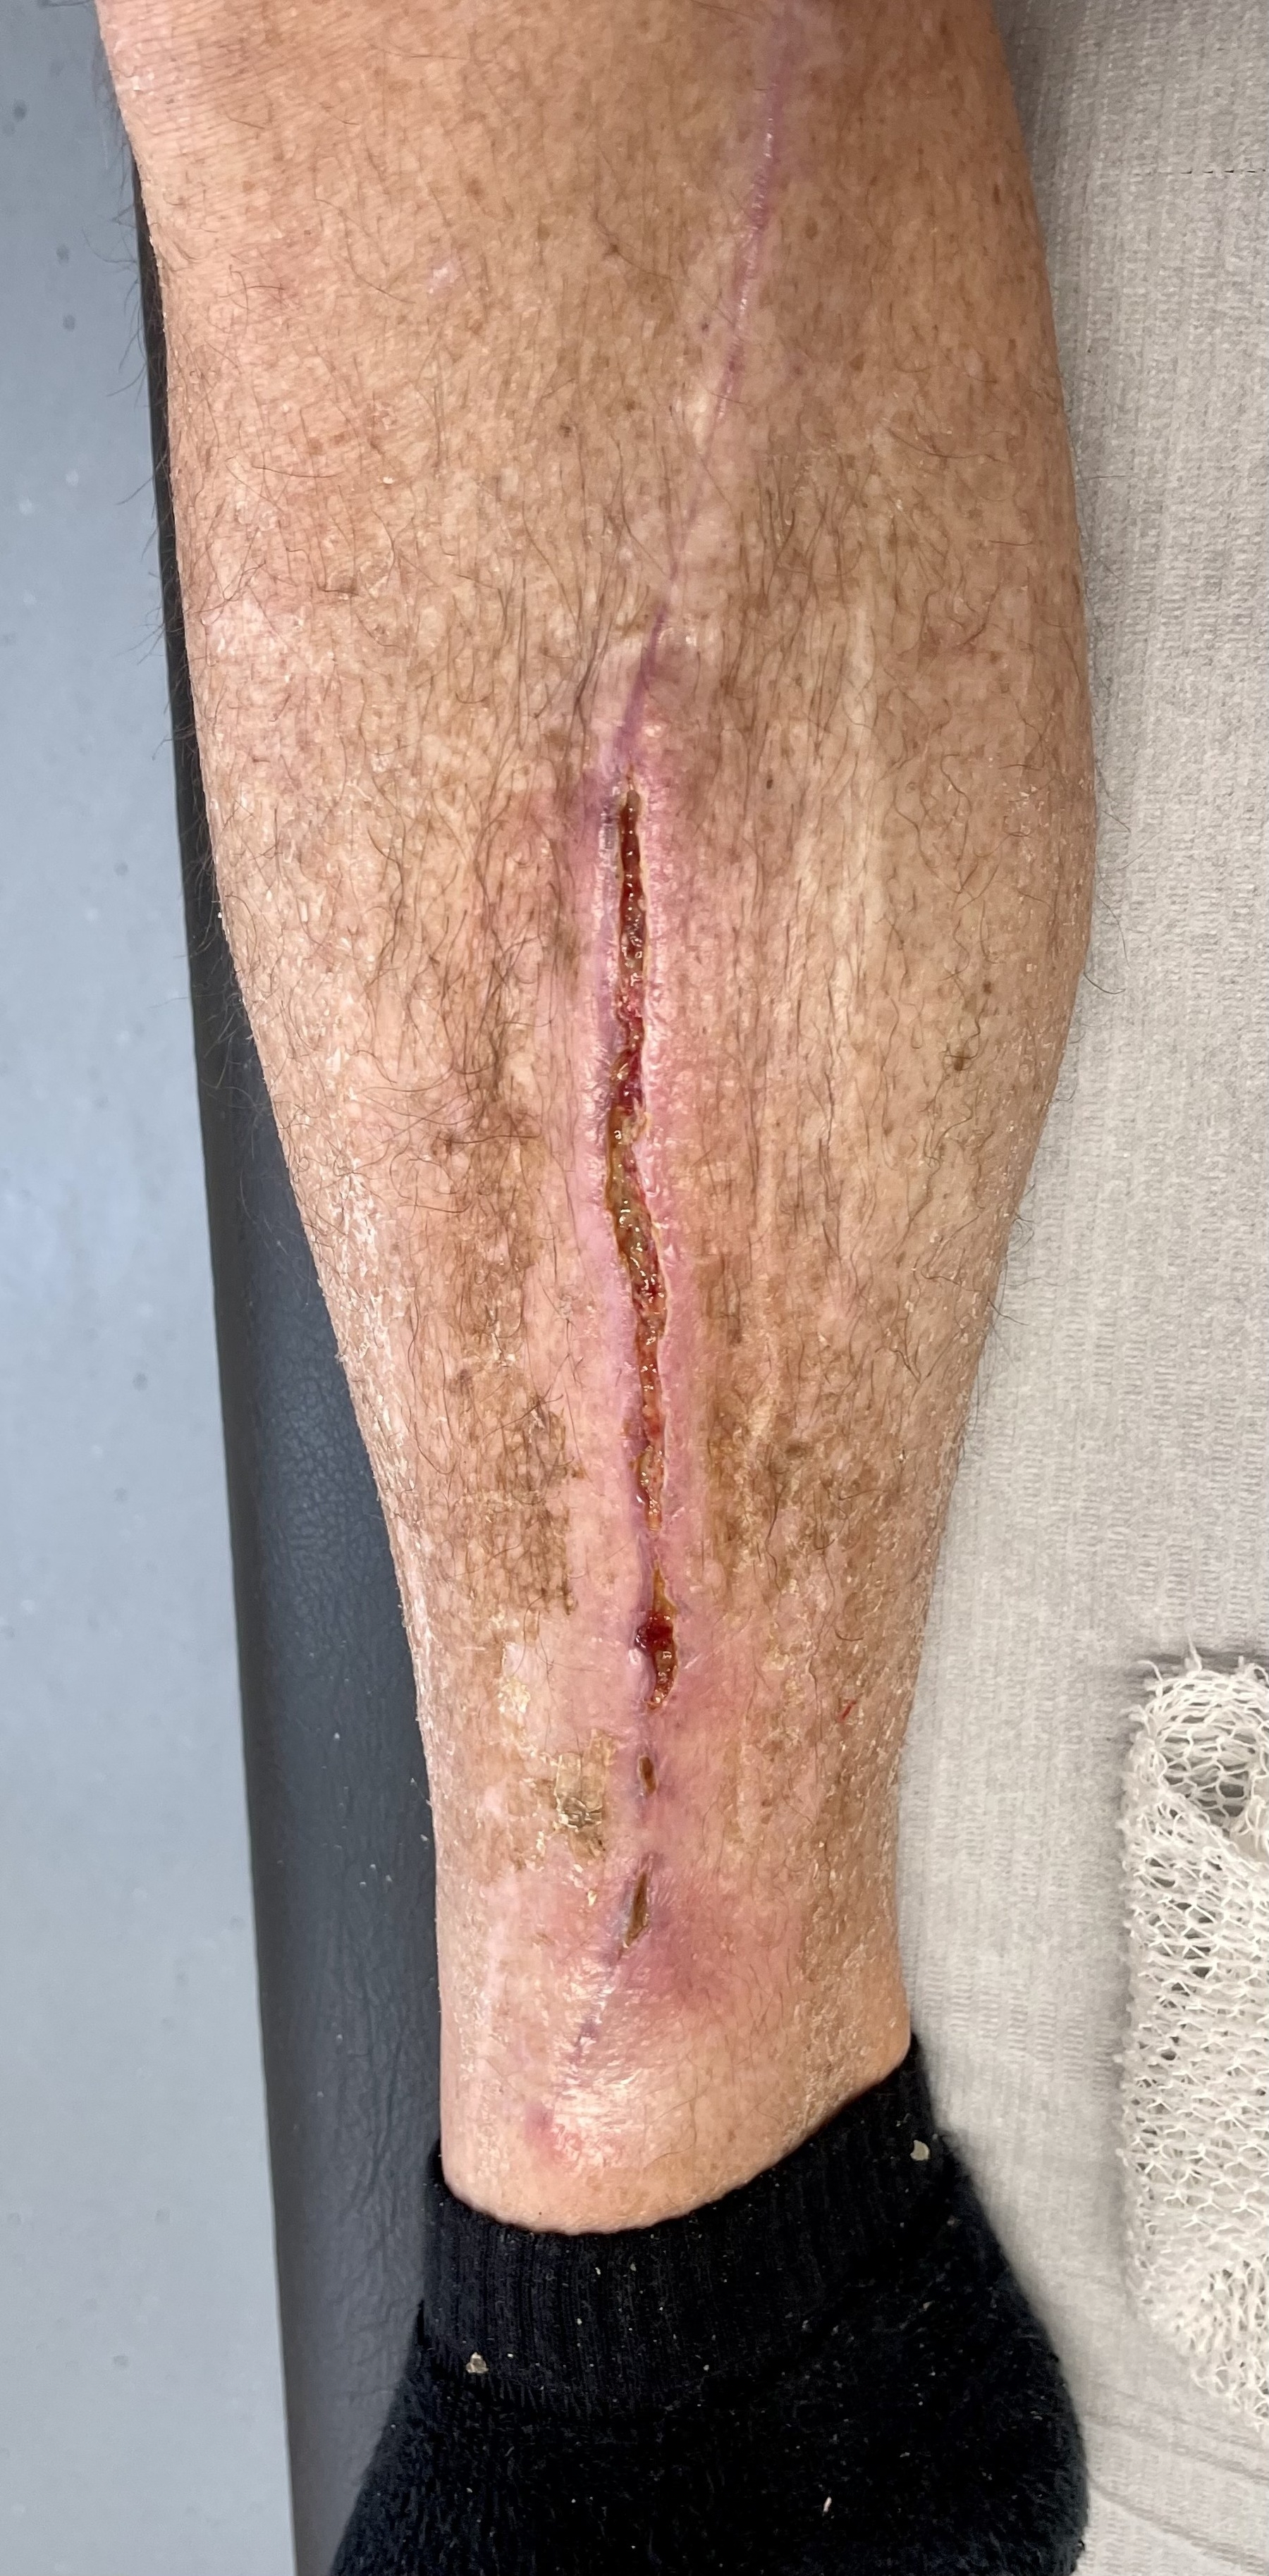 55 days post sapheous vein removal